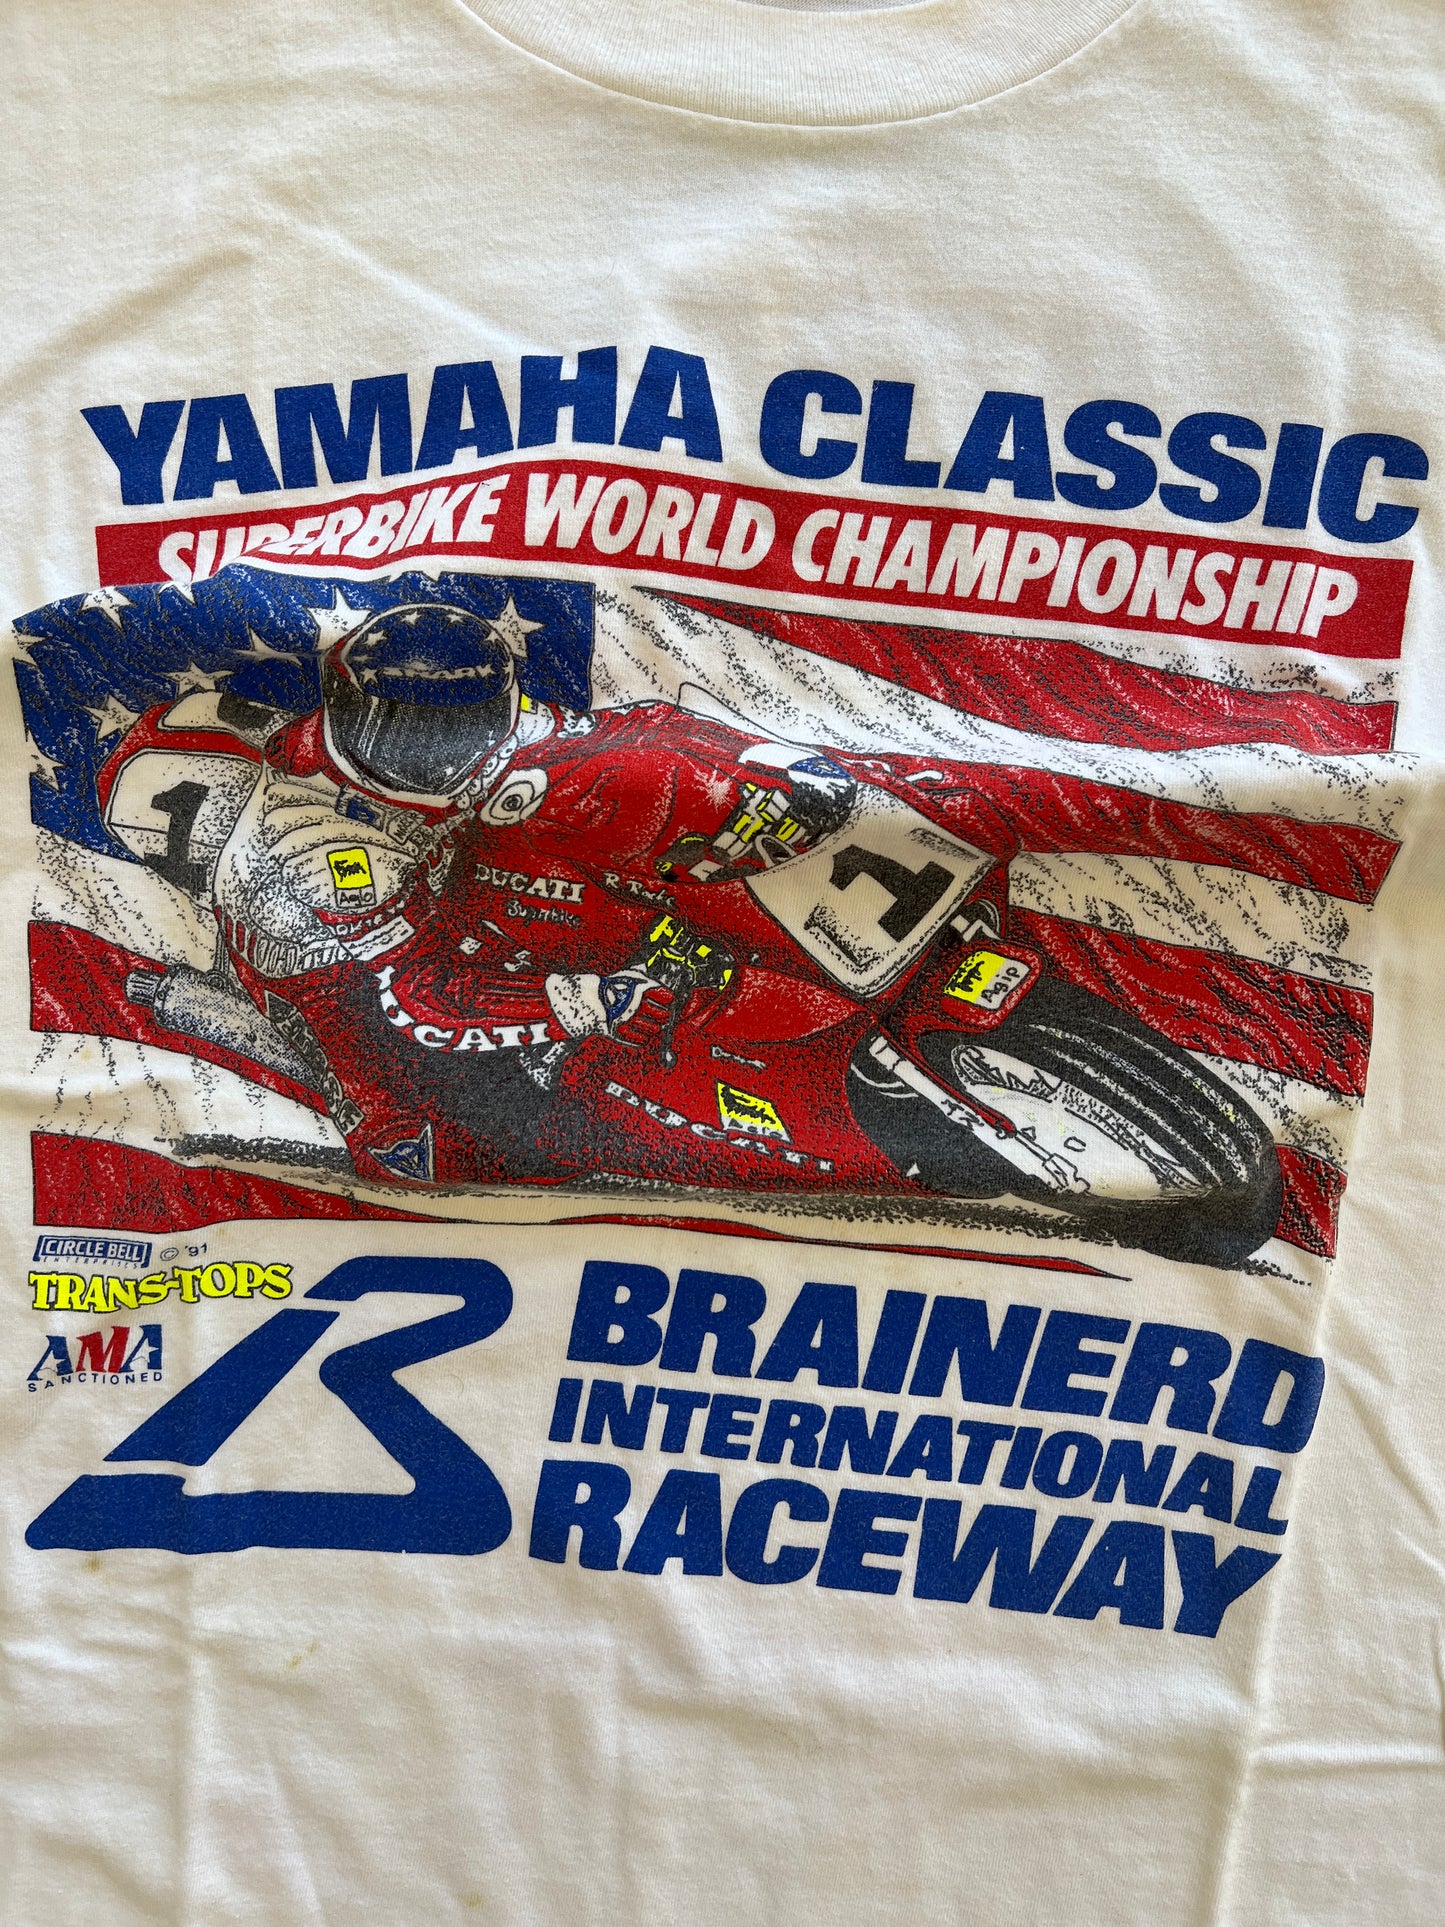 Vintage Yamaha Classic Racing Shirt - M